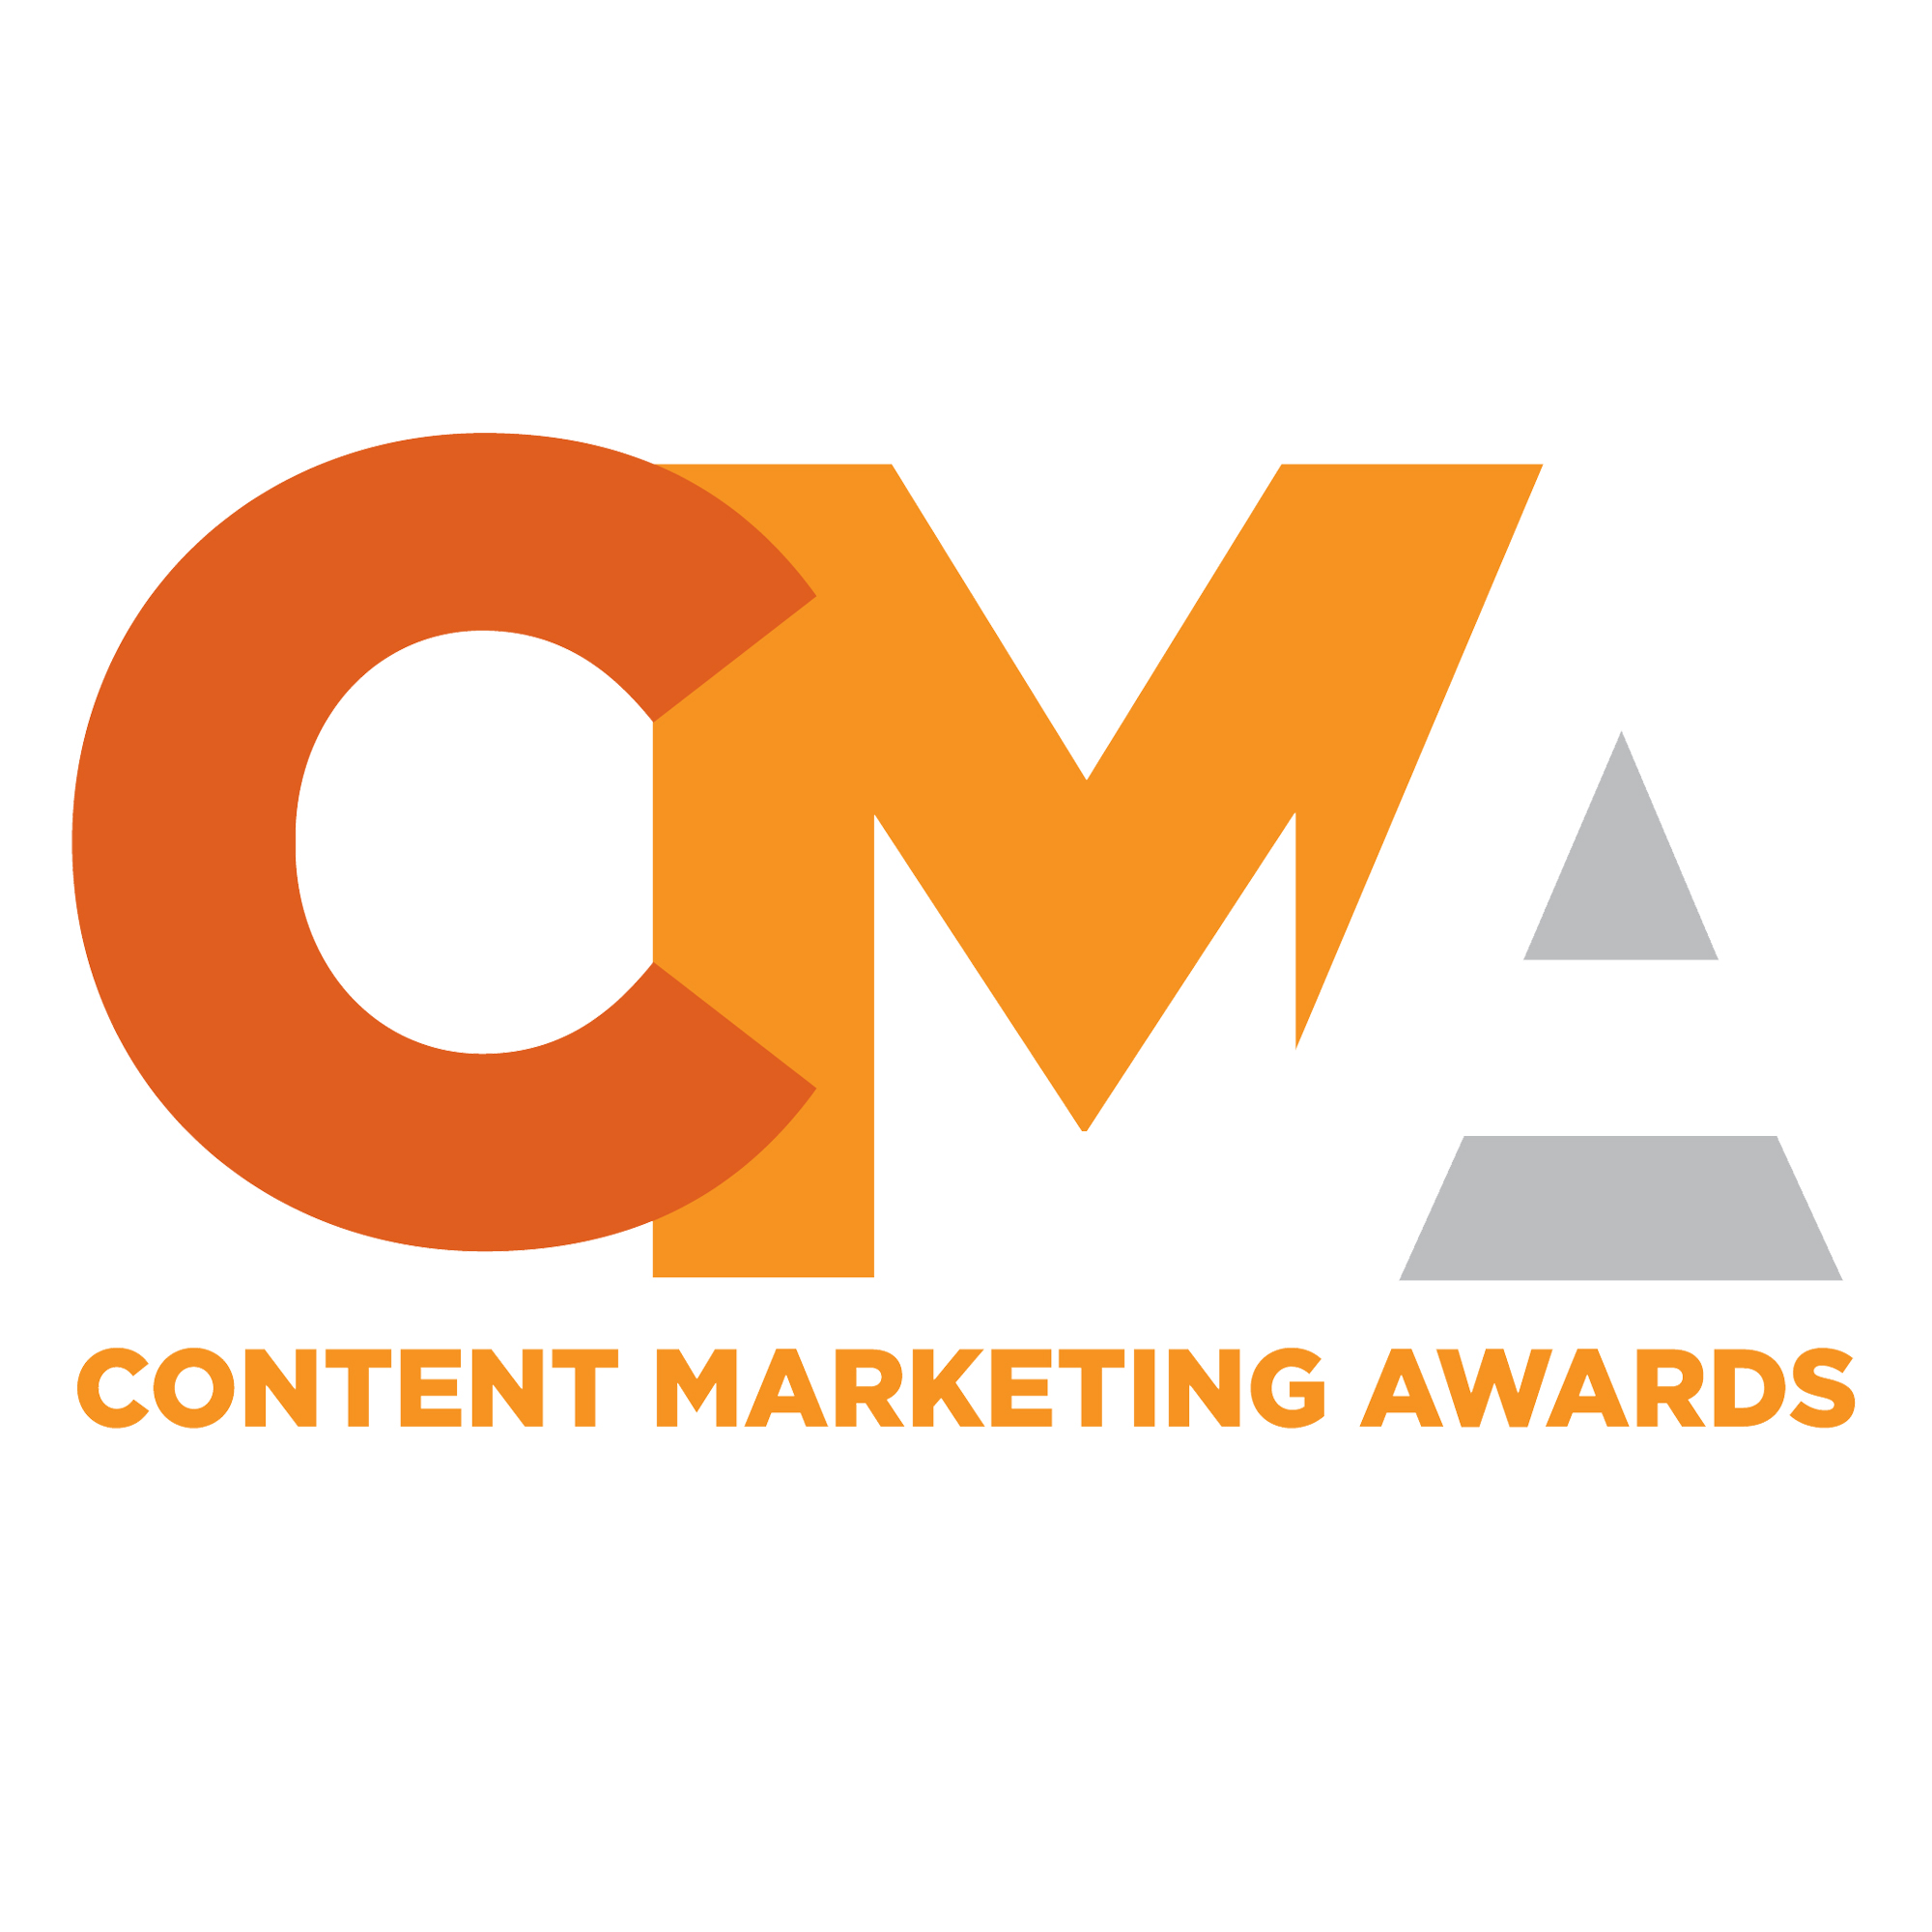 Award, Logo_(Content Marketing Institute) Content Marketing Awards_using their 2000 export, bars removed, on white_FAV.jpg